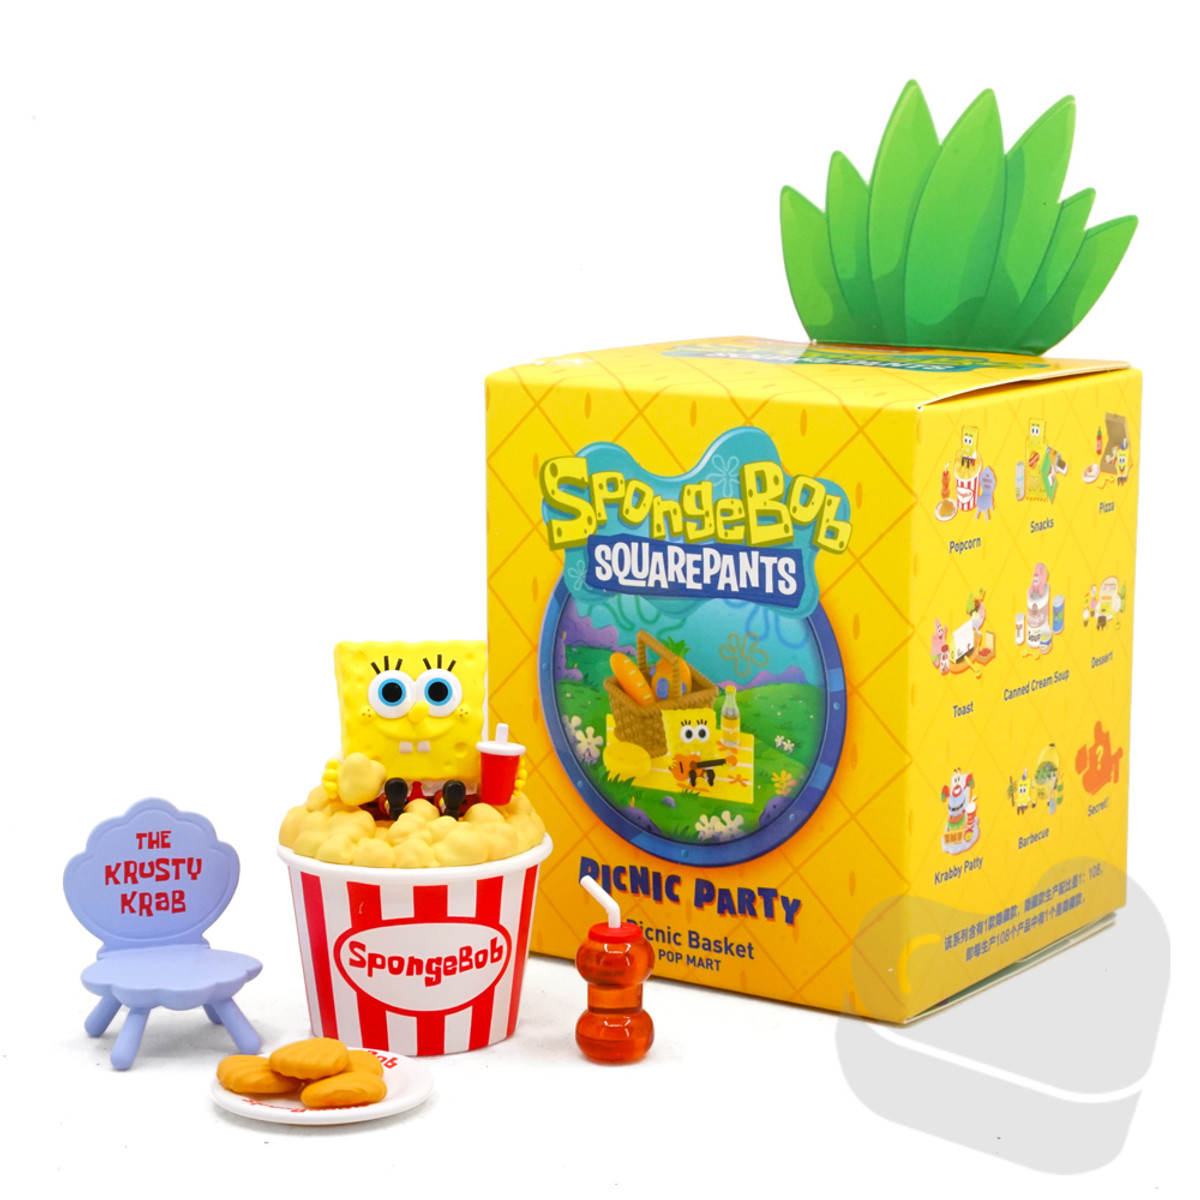 Spongebob Squarepants Picnic Party Series Blind Box - myplasticheart